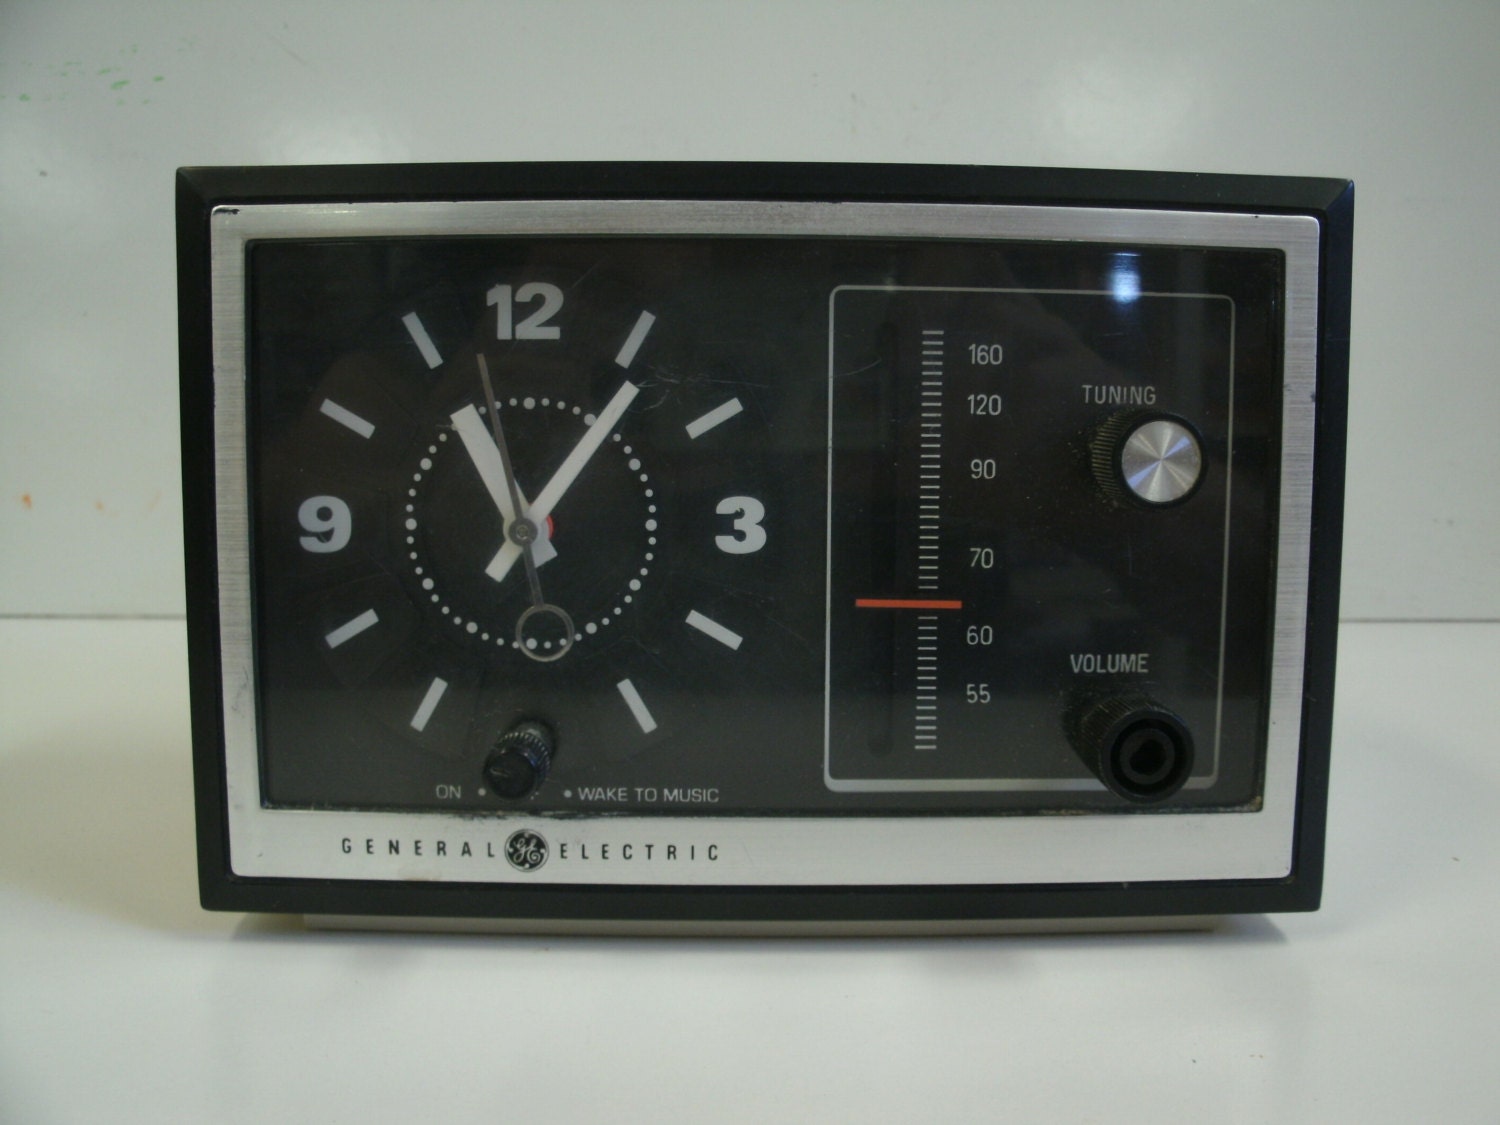 Vintage General Electric Alarm Clock Radio - AM only